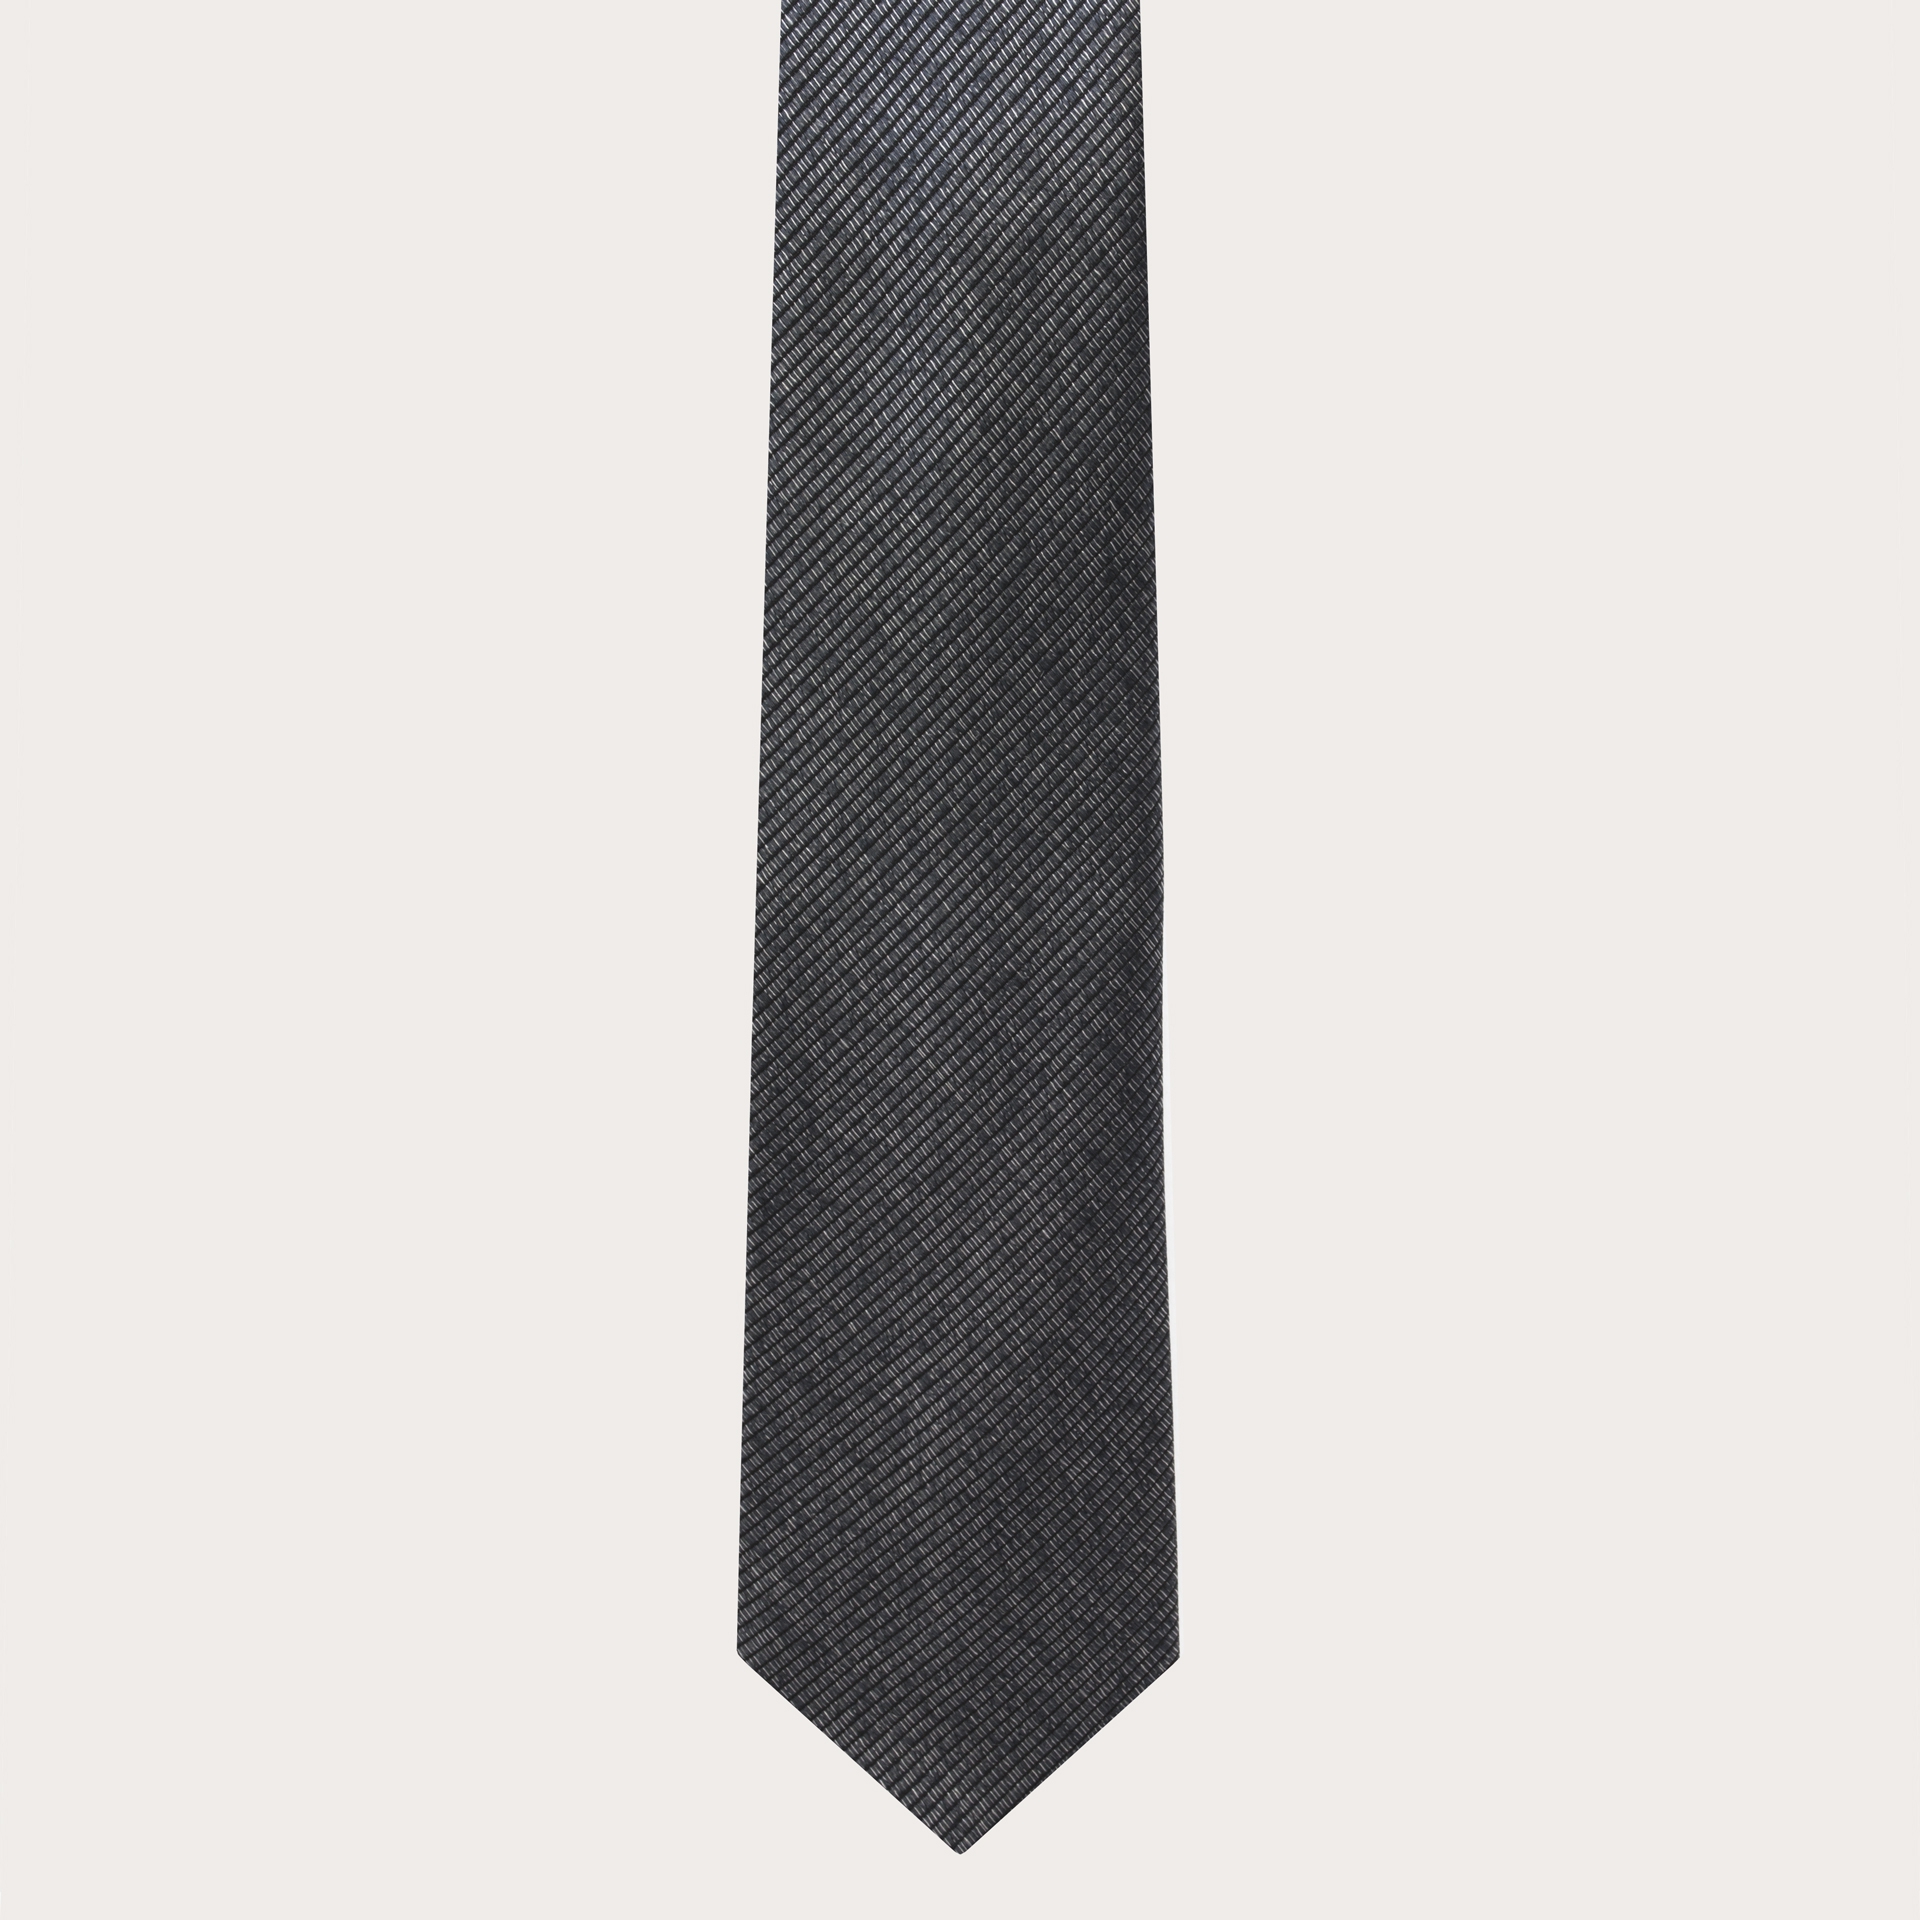 BRUCLE Cravatta uomo in seta jacquard melange nera e argento